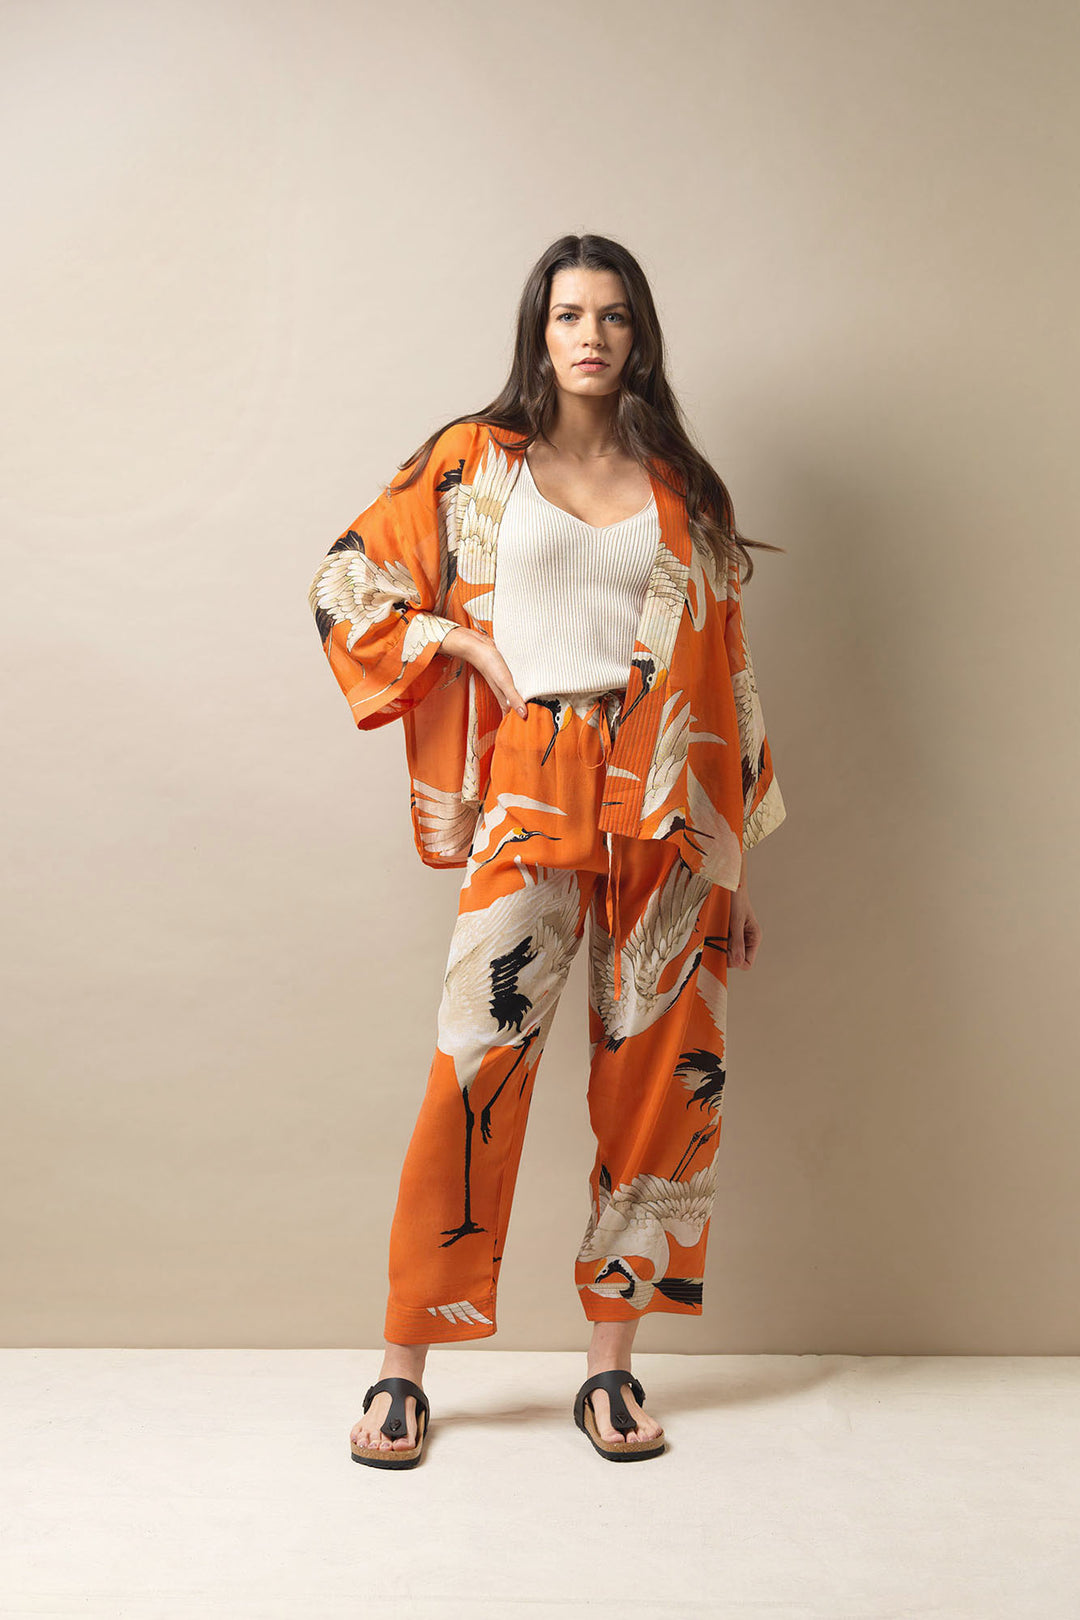 Stork Orange Kimono - One Hundred Stars